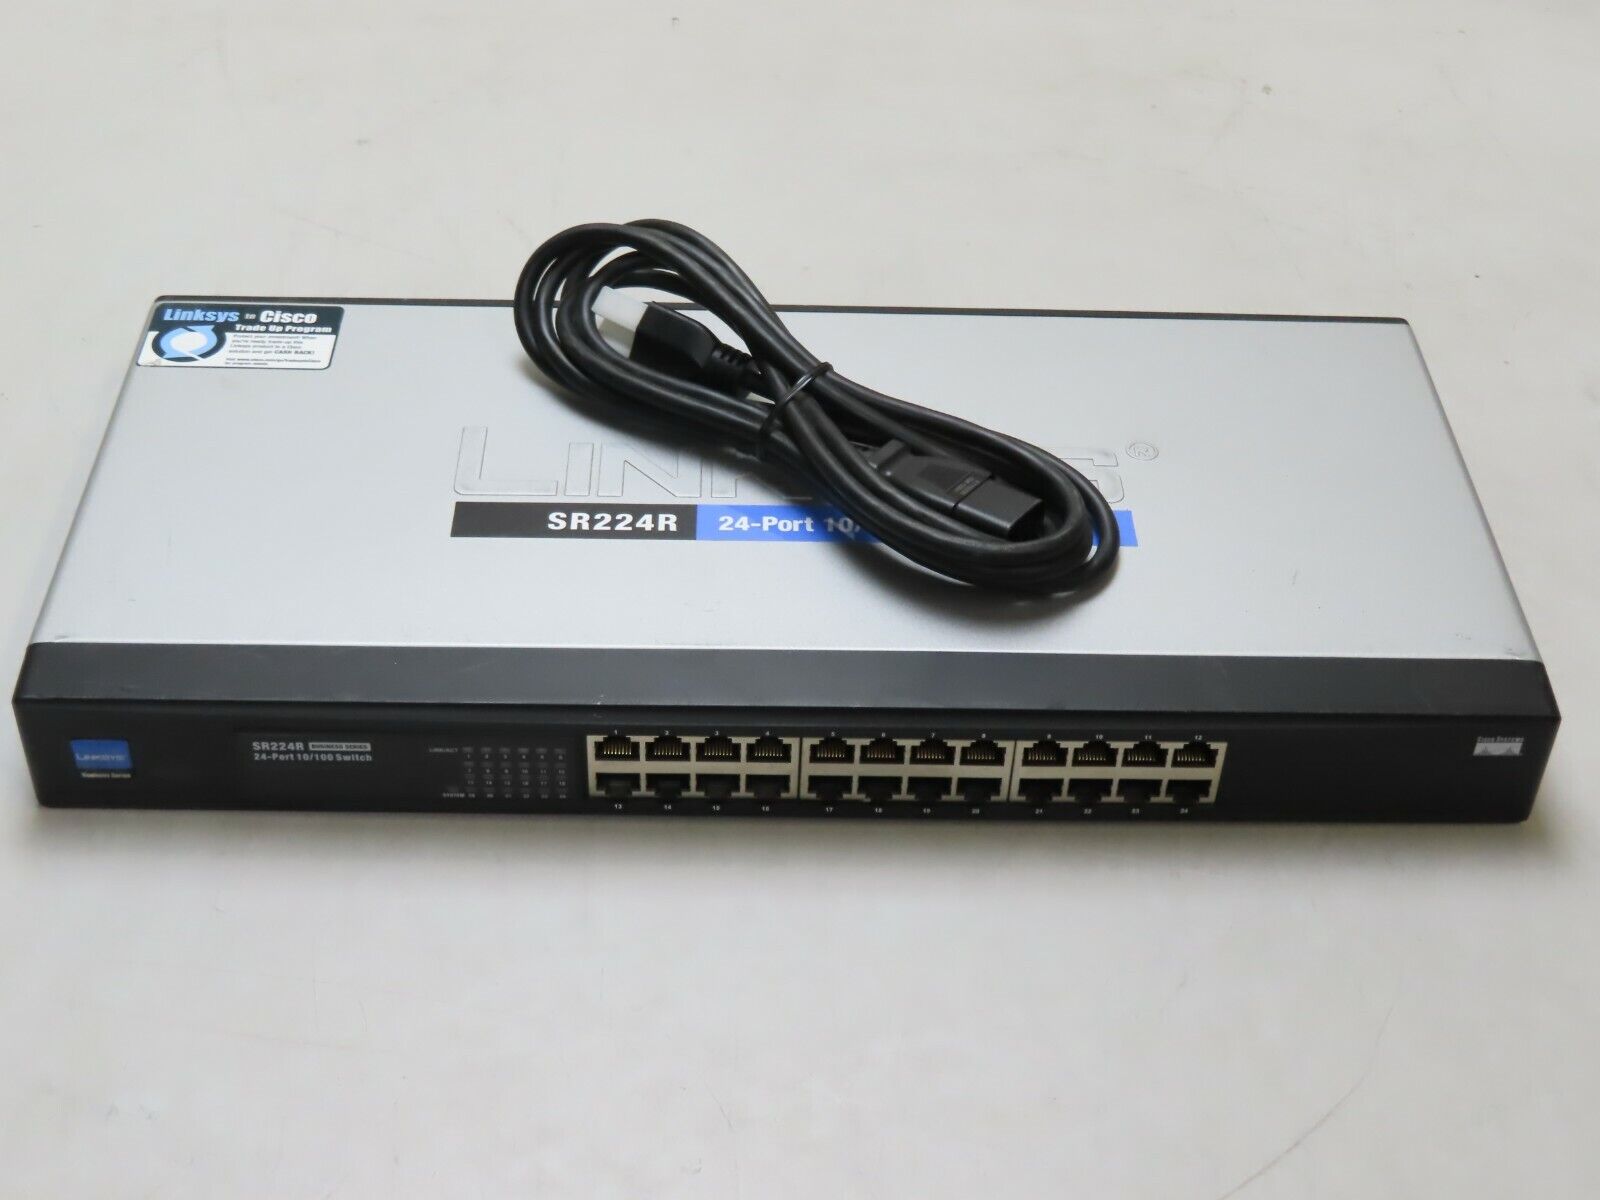 Cisco Linksys SR224R 24-Port 10/100 24-Port Switch